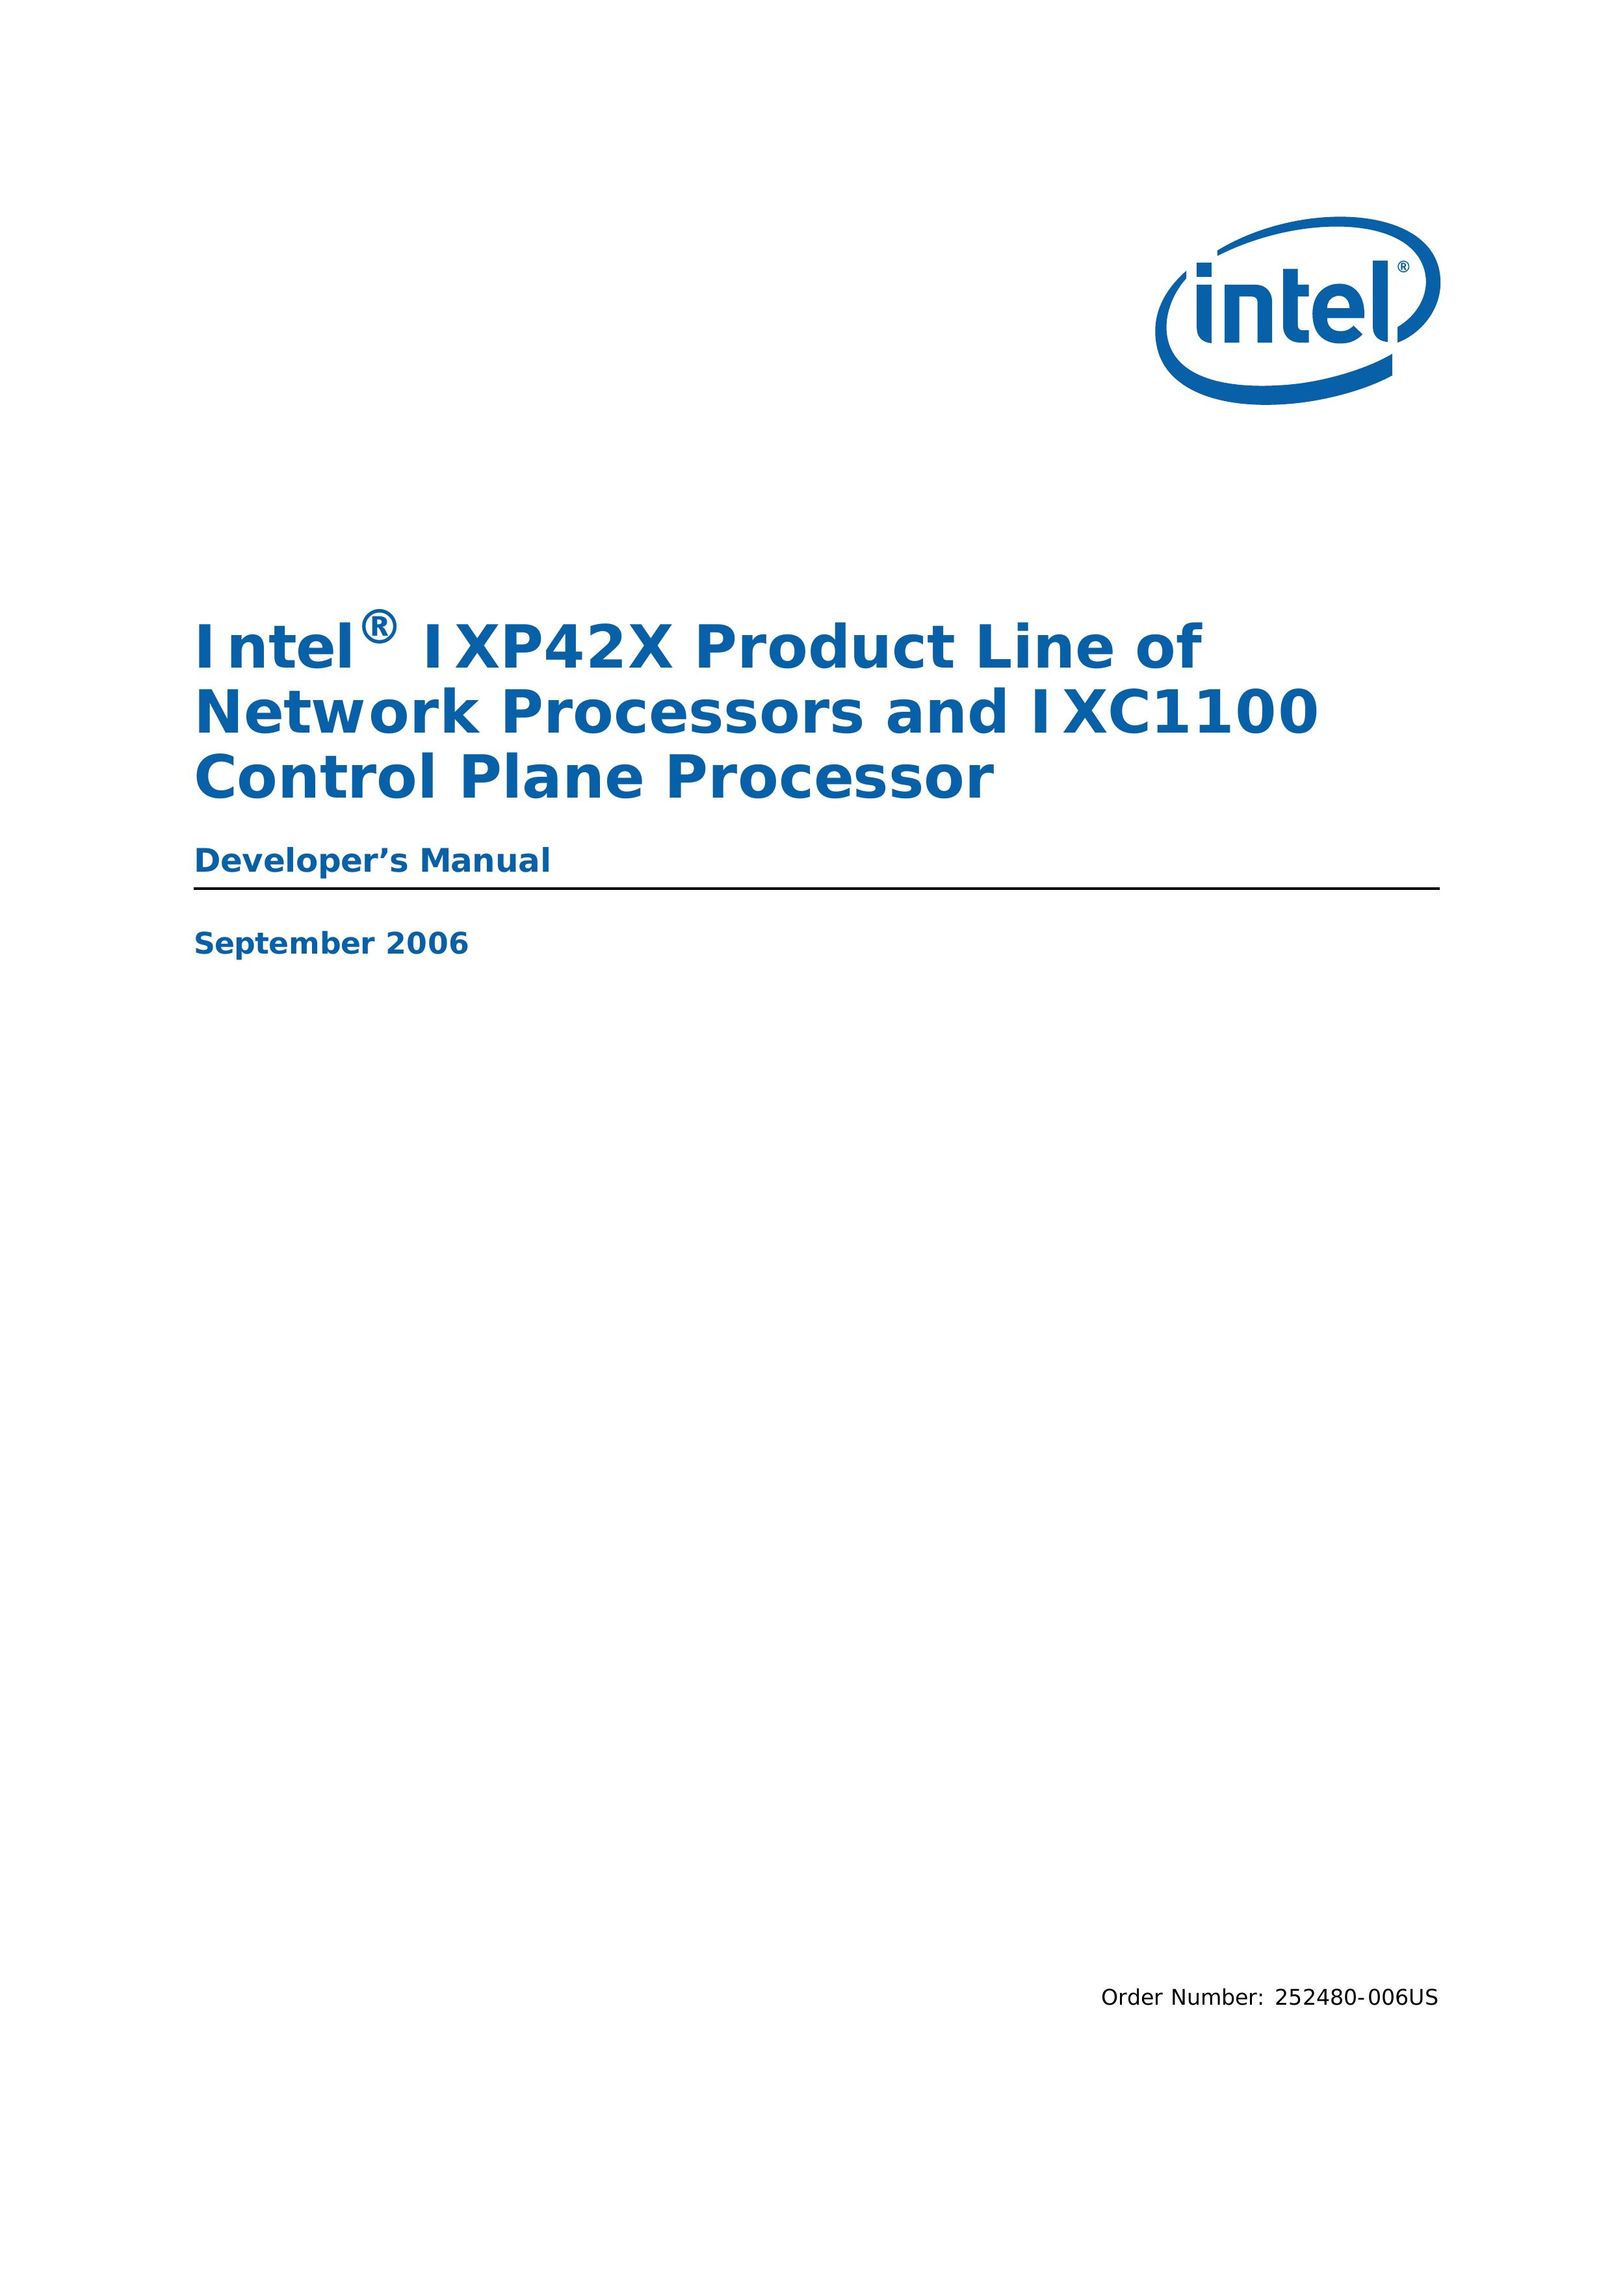 Intel IXP42X Personal Computer User Manual